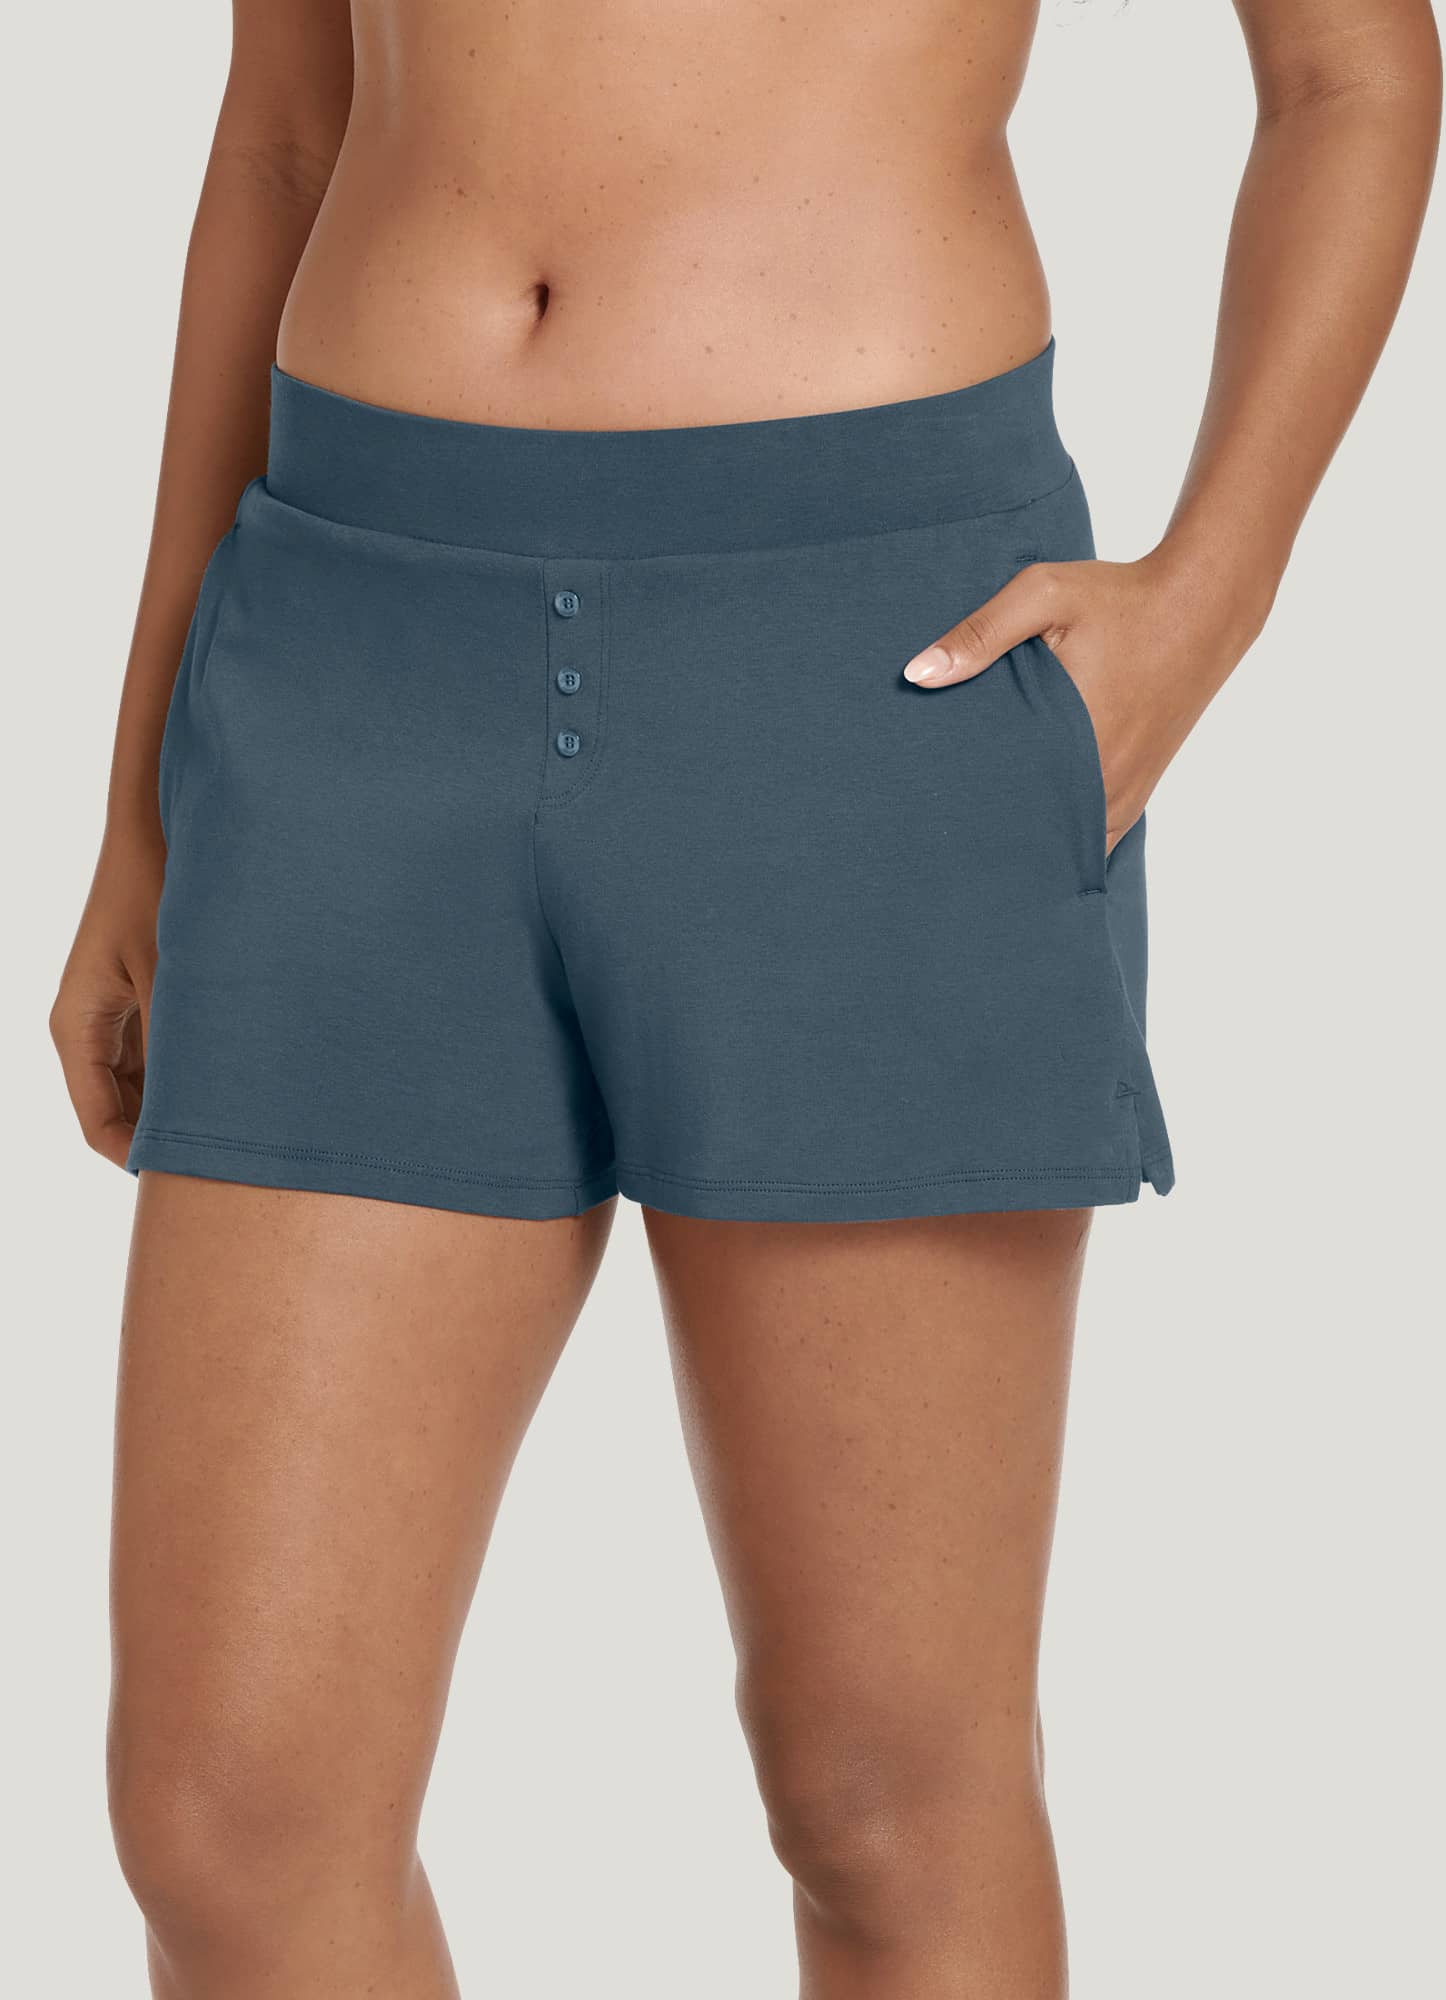 Ladies cotton shorts/ladies shorts/women shorts/ladies hot pants/night hot  pants/women night shorts